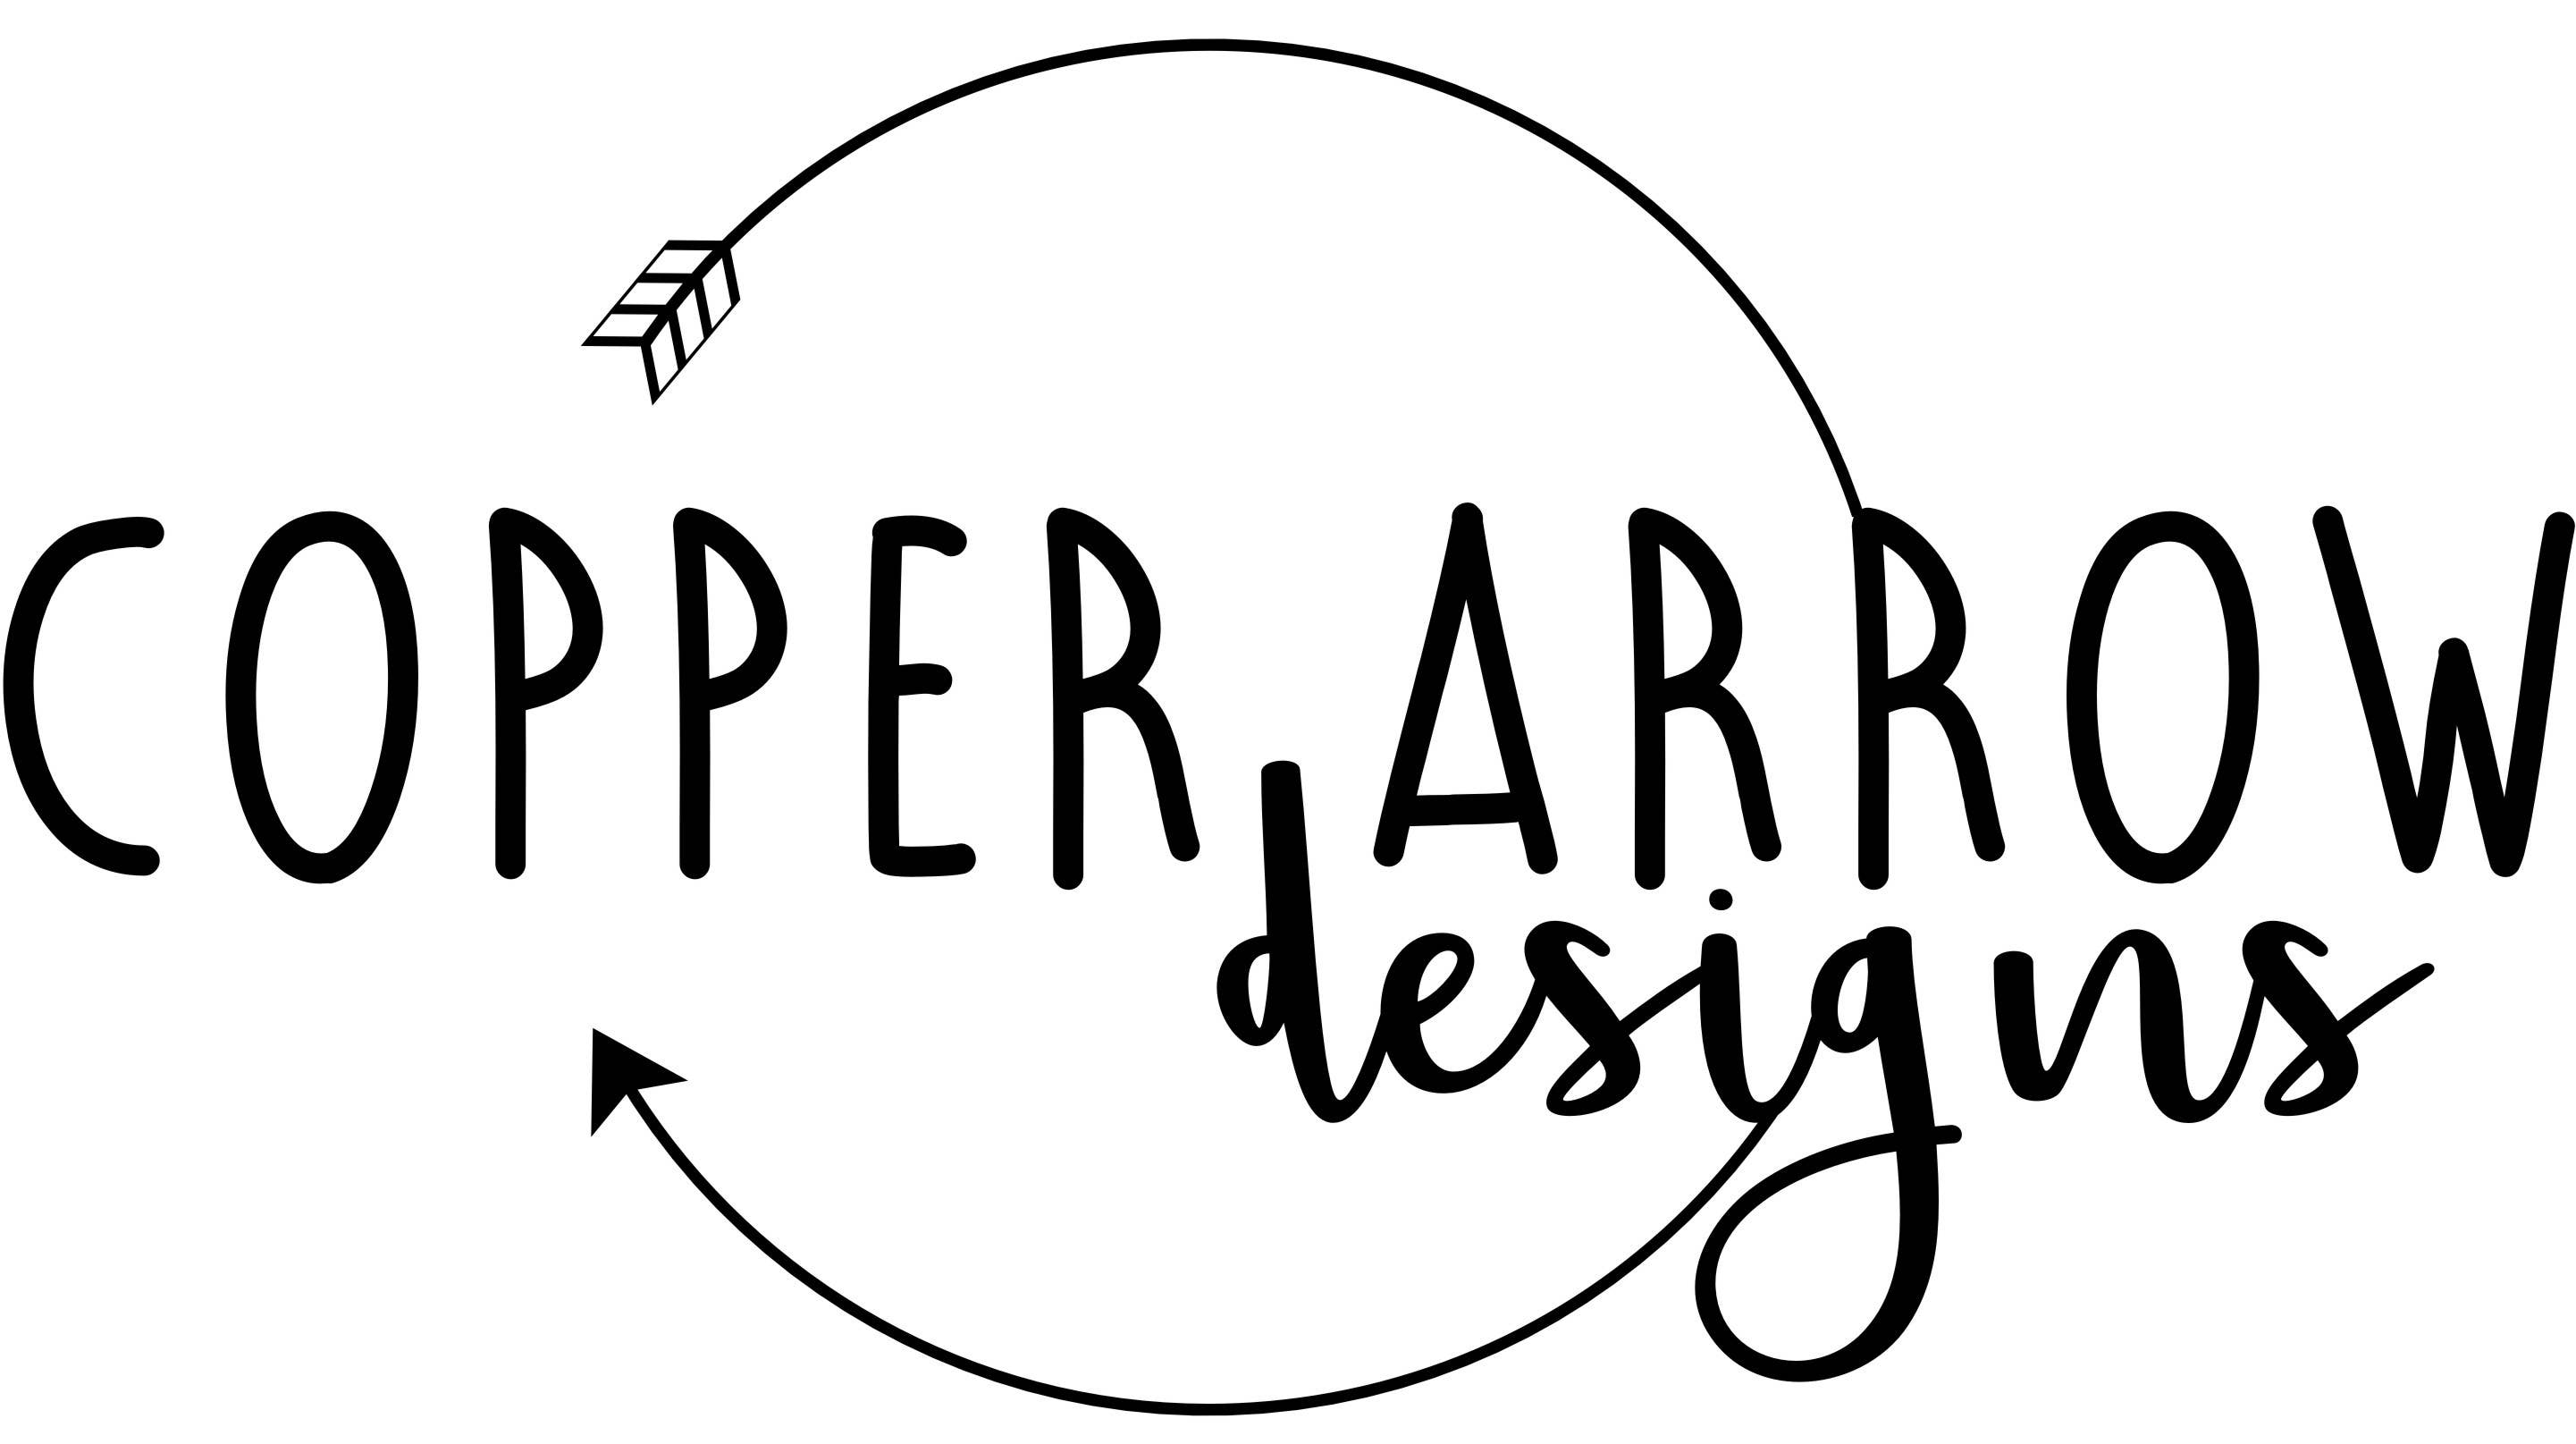 Copper Arrow Designs wholesale products